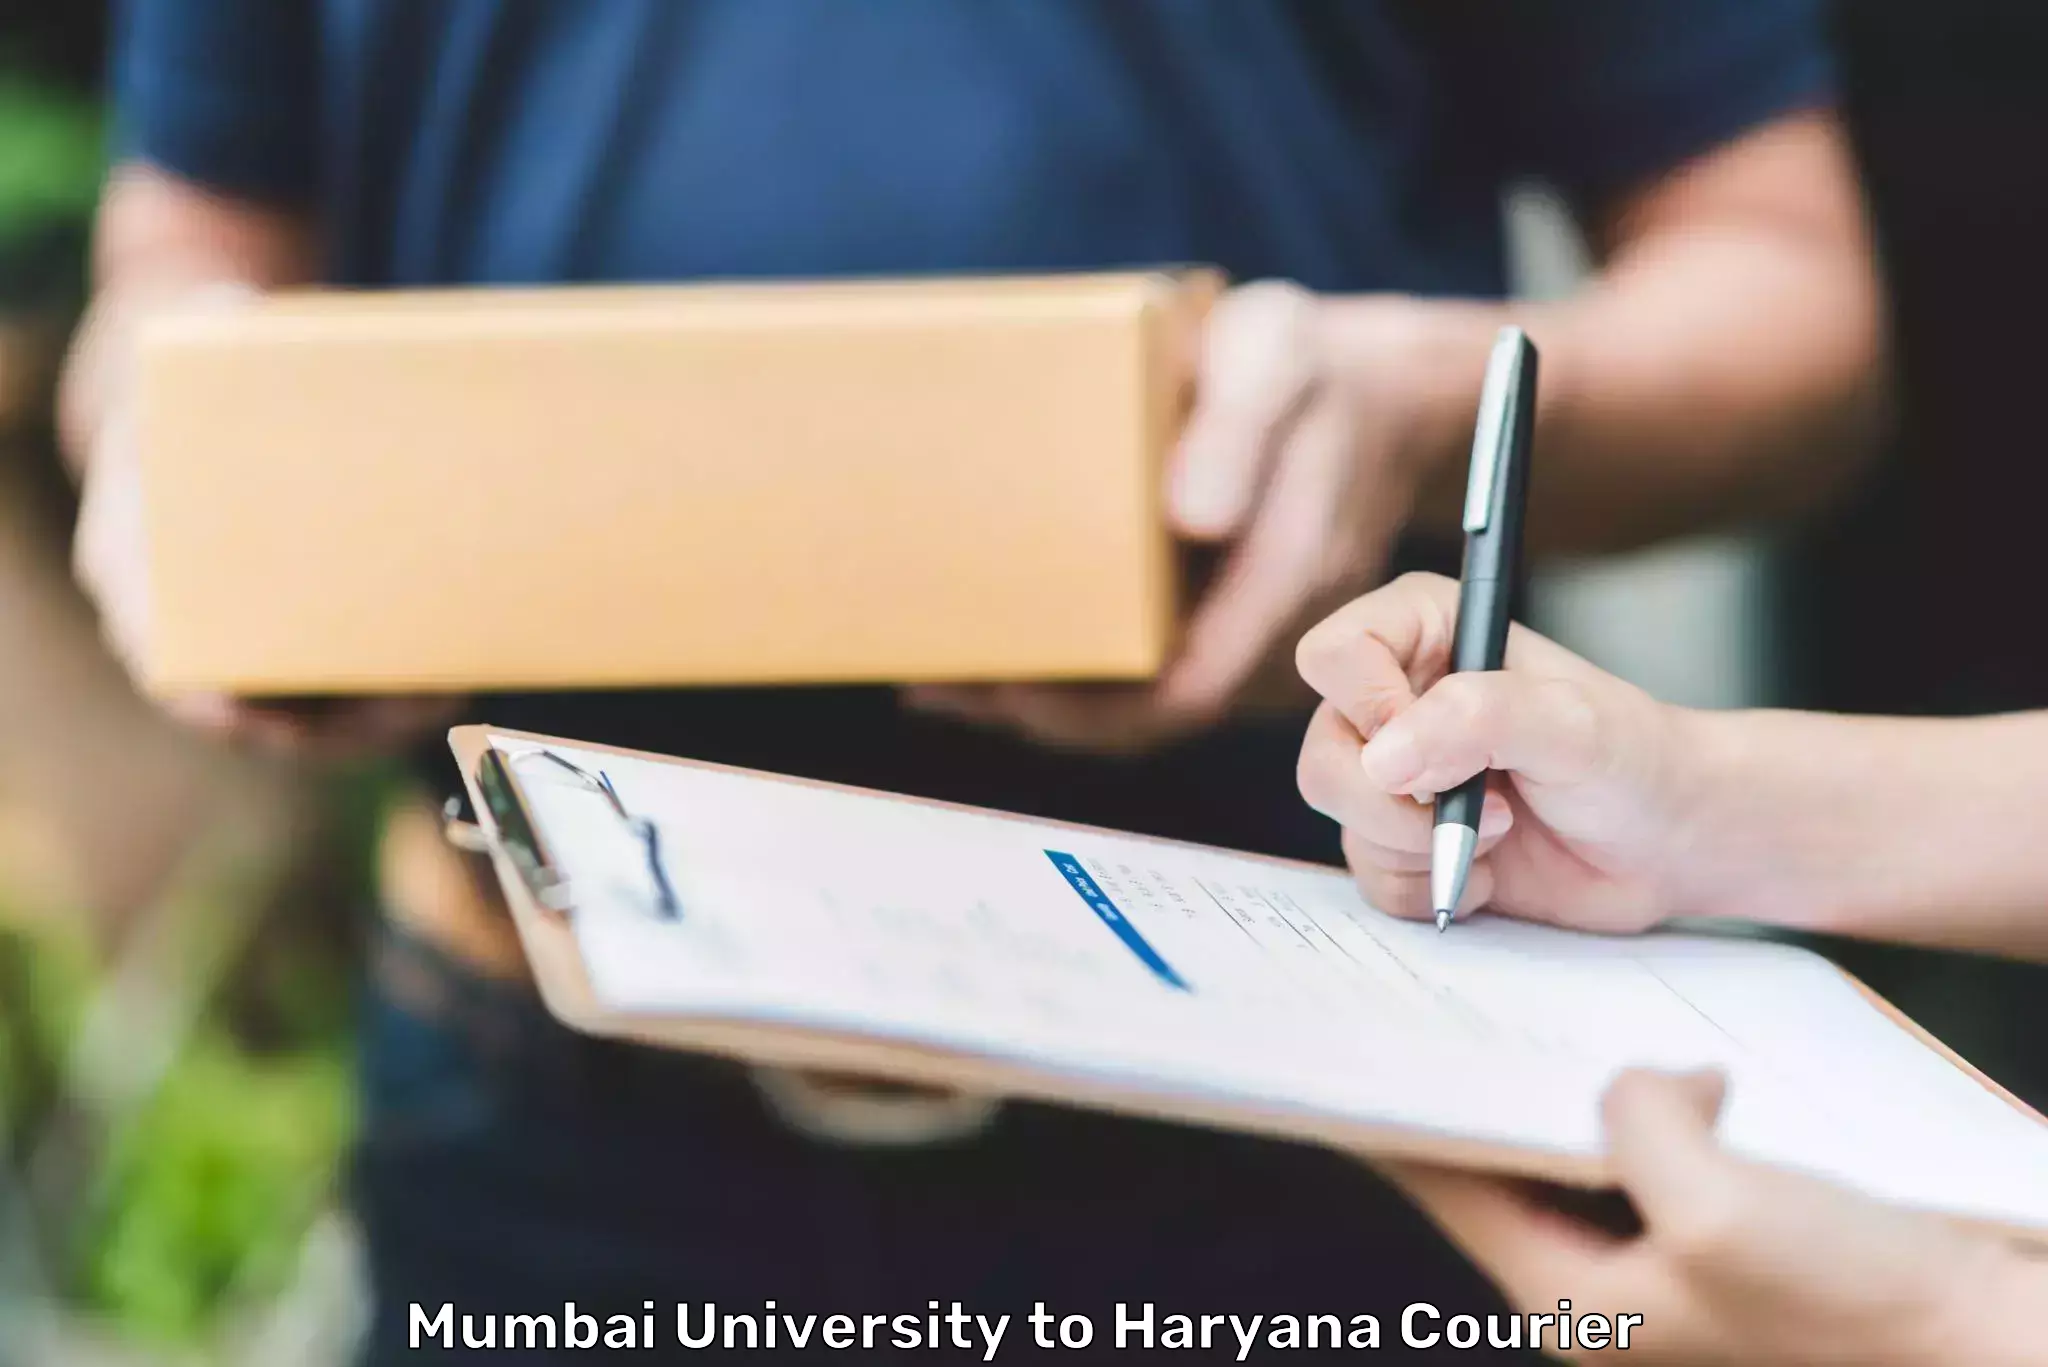 Courier service booking Mumbai University to Yamuna Nagar